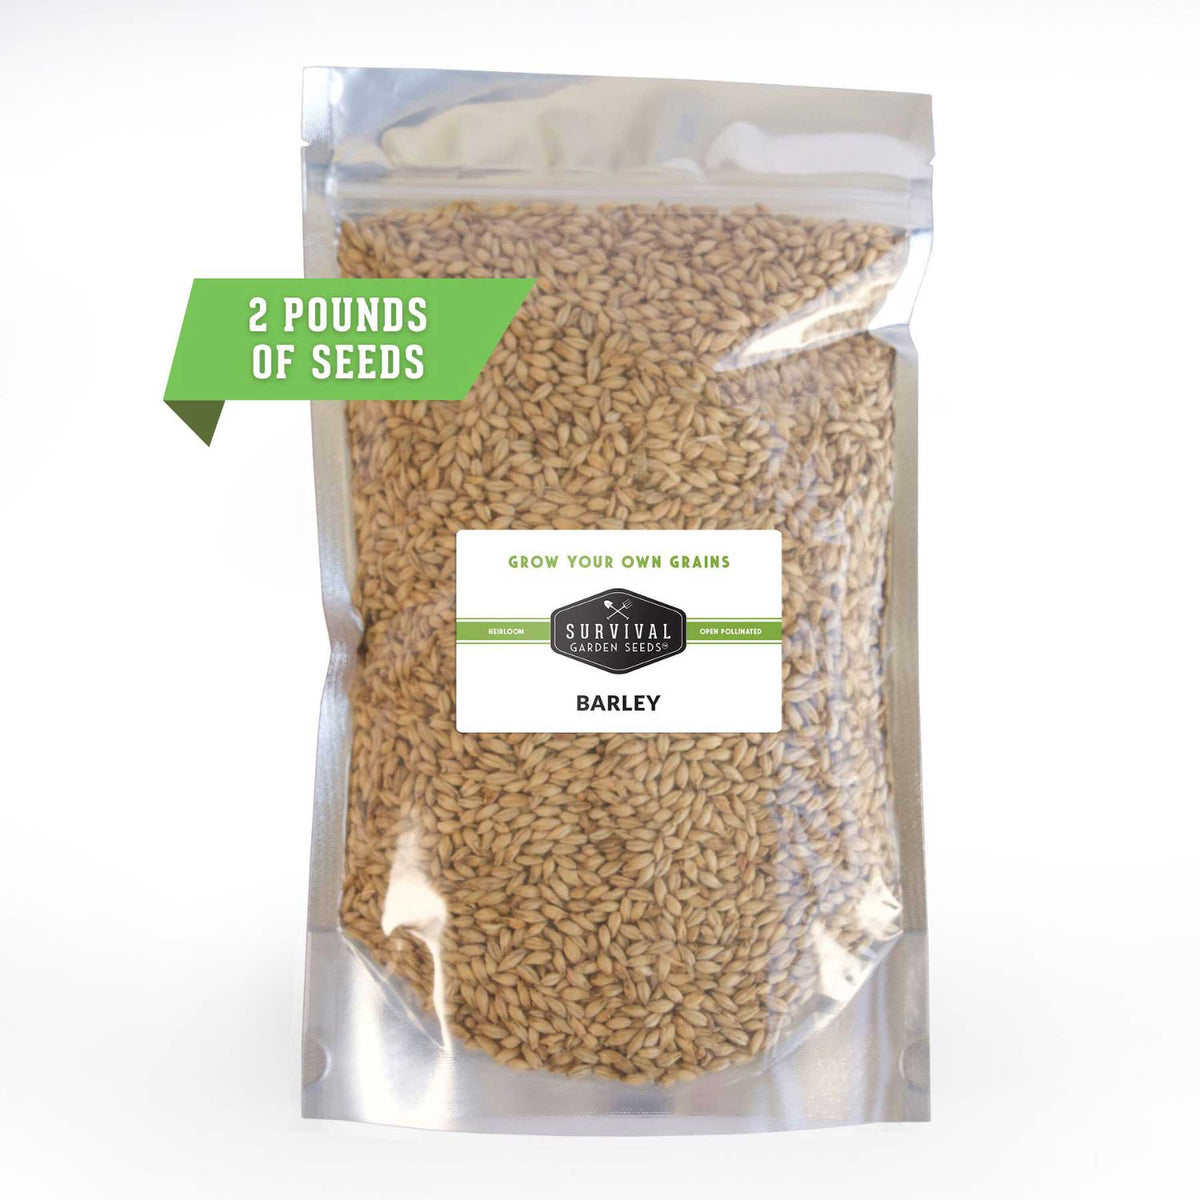 2lbs of bulk barley seeds